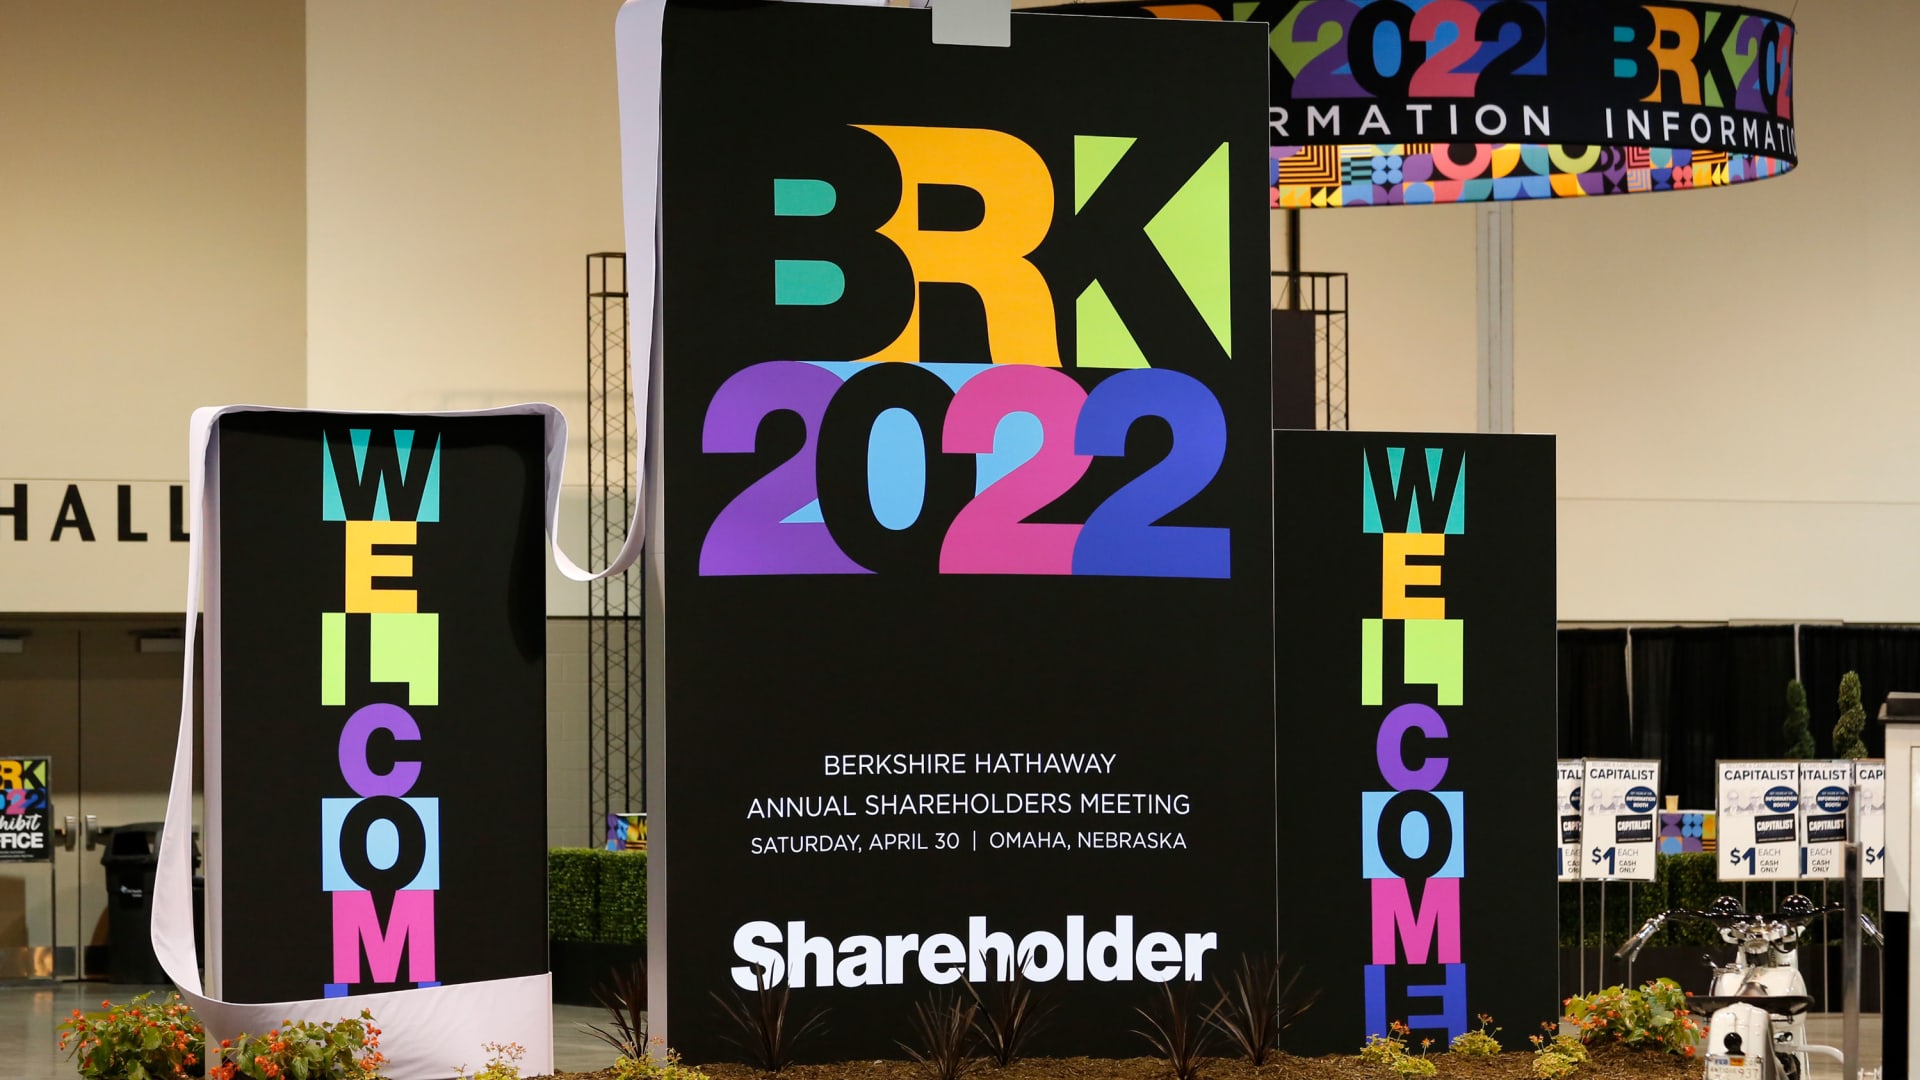 Berkshire Hathaway Annual Shareholder Meeting signage in Omaha, Nebraska, April 29, 2022.